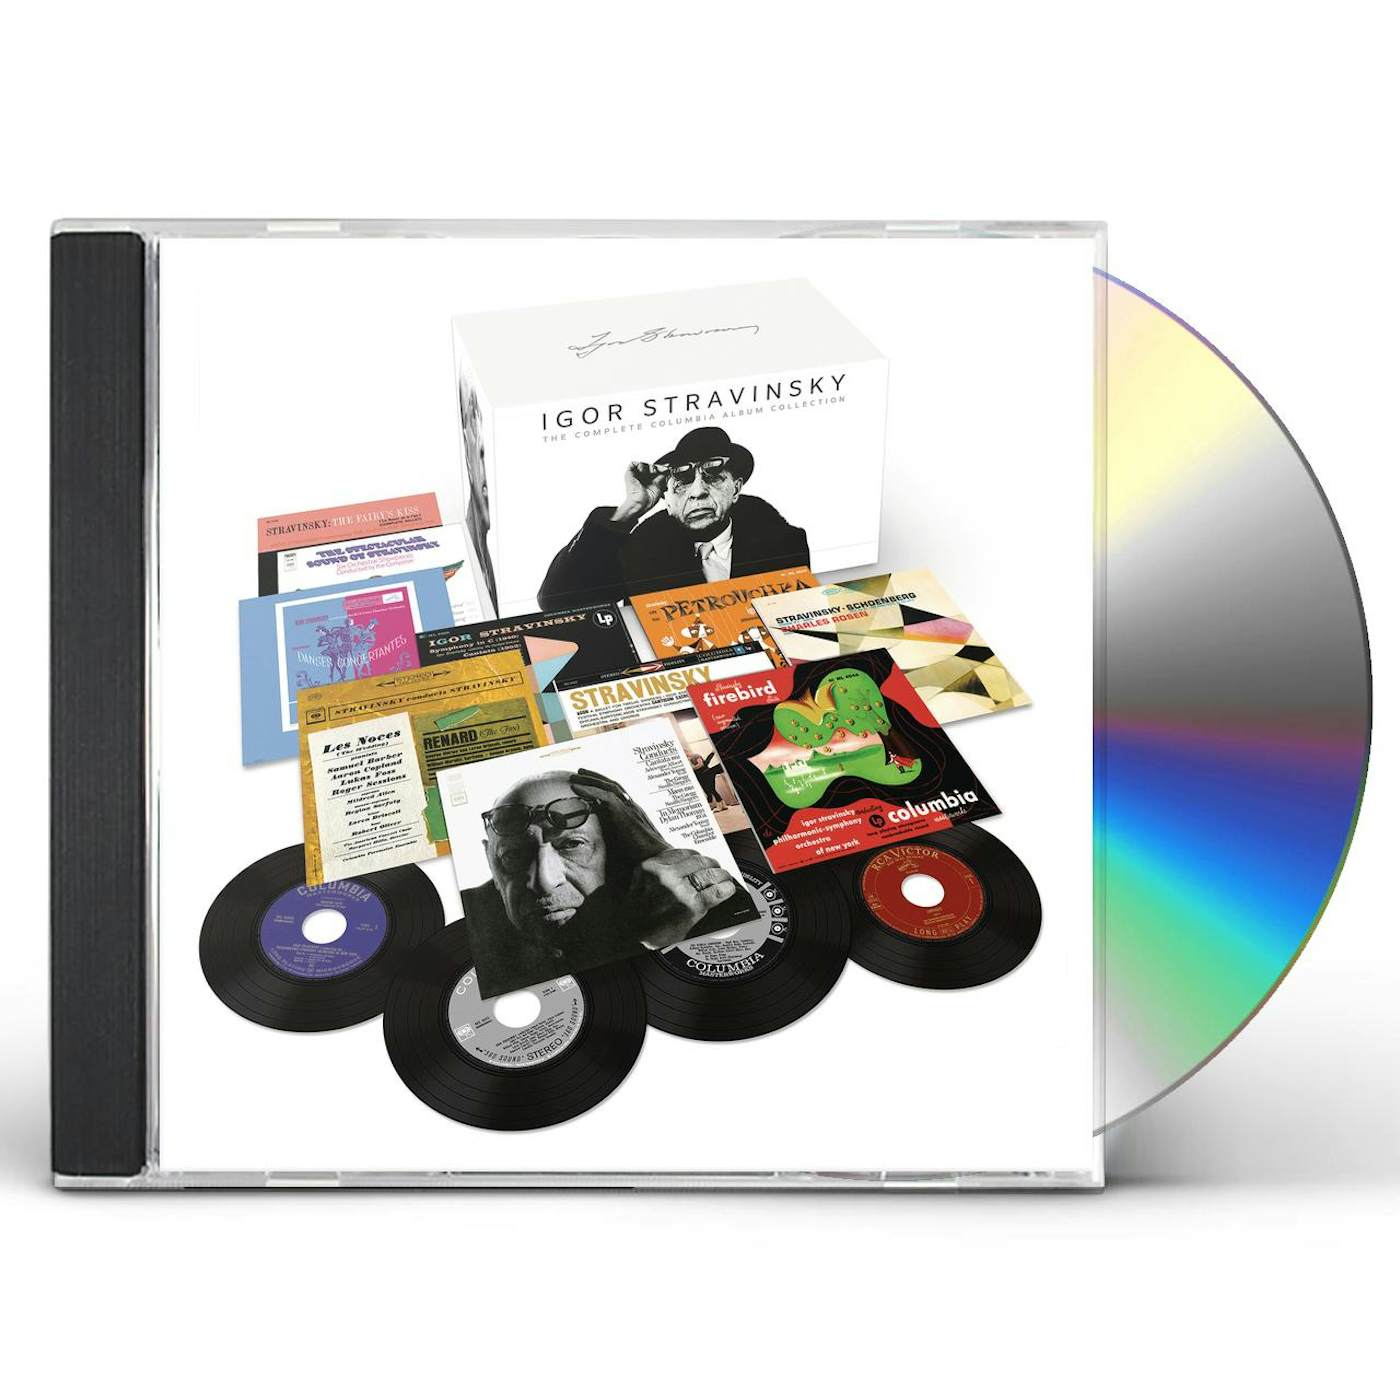 Igor Stravinsky COMPLETE ALBUM COLLECTION CD